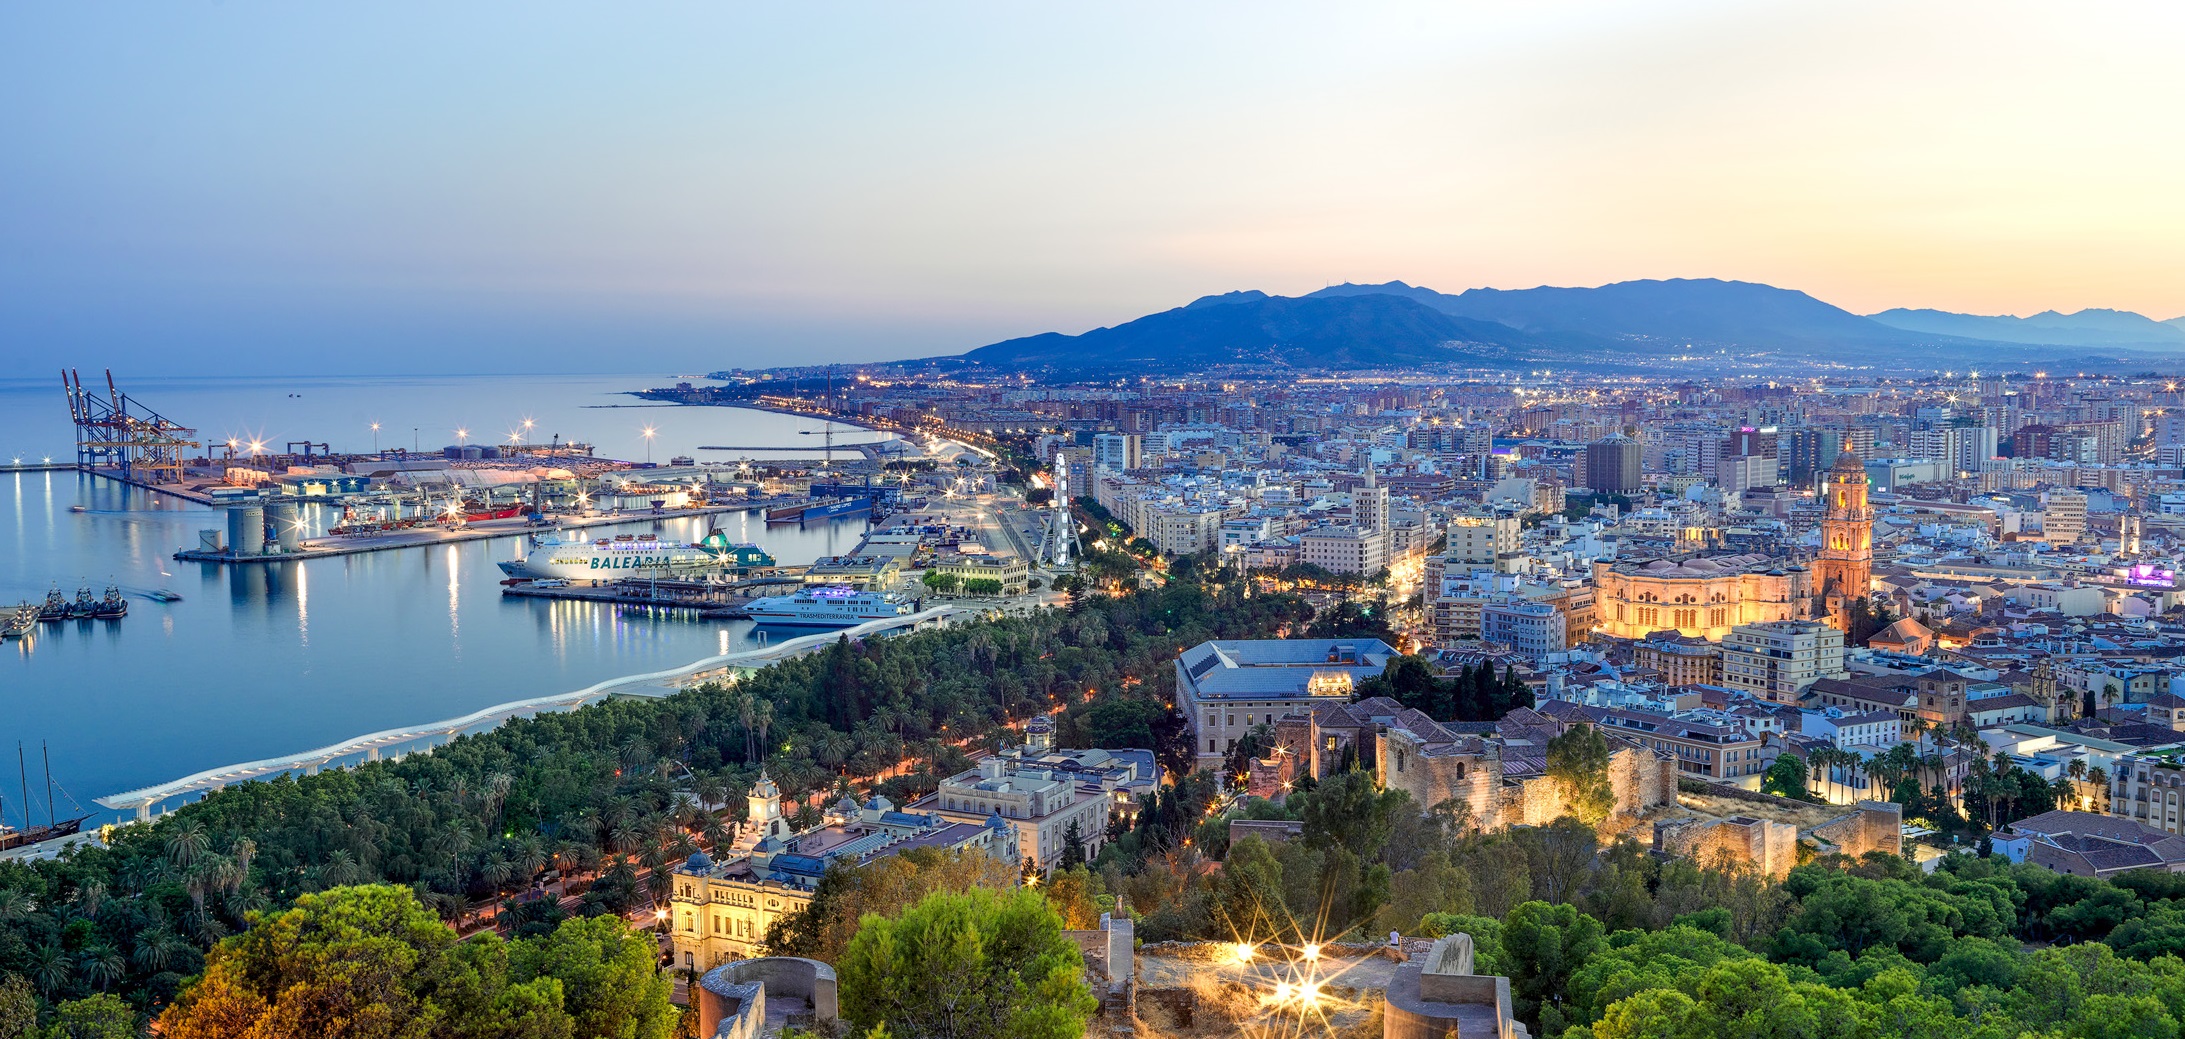 The Gibralfaro: The Most Spectacular Views in Malaga